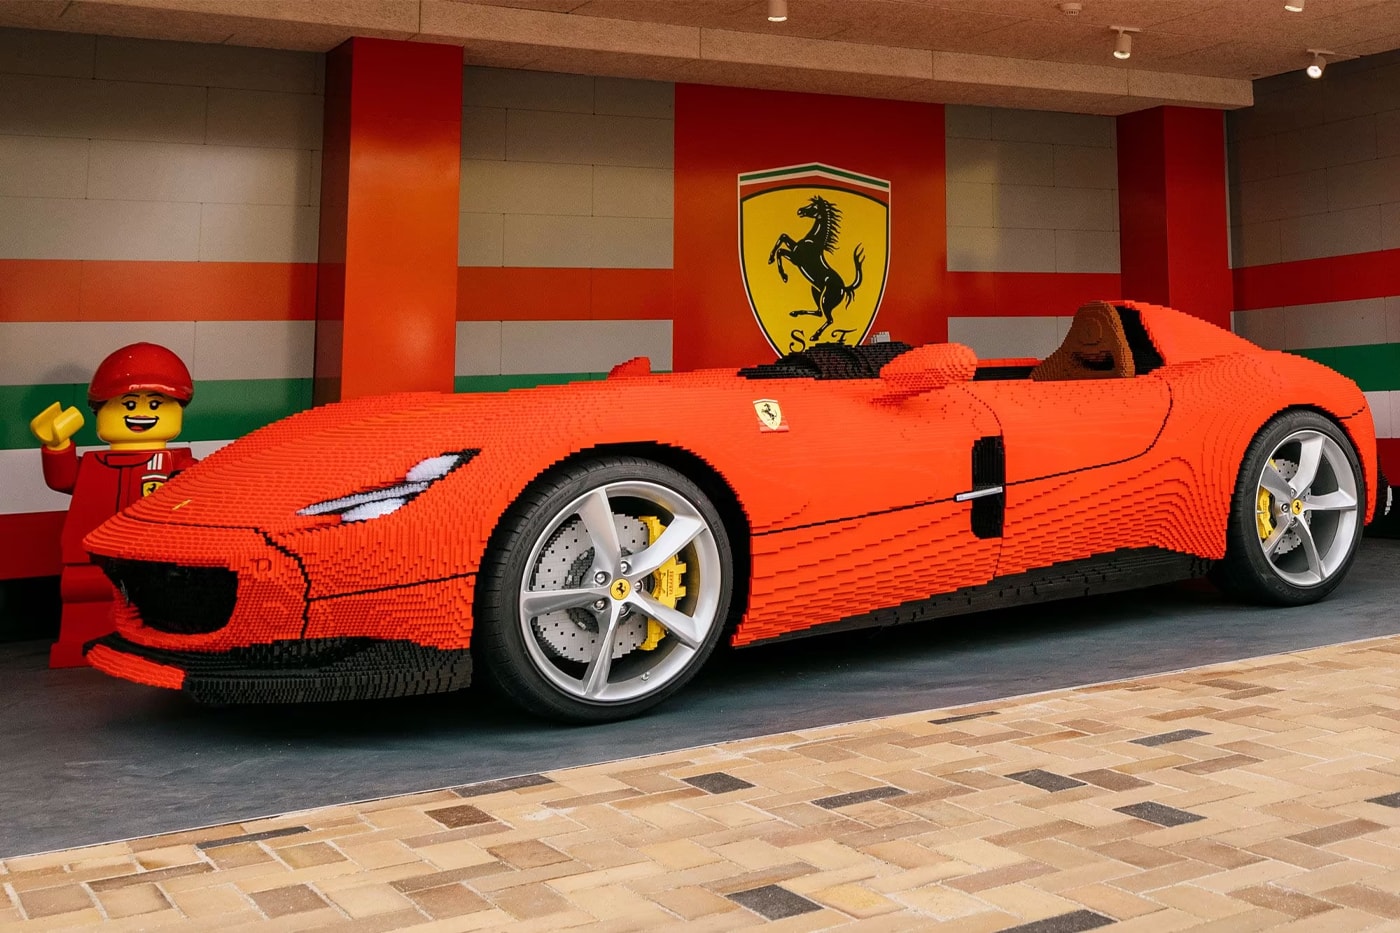 LEGO 實體化 1:1 尺寸 Ferrari 單座超跑 Monza SP1 積木模型